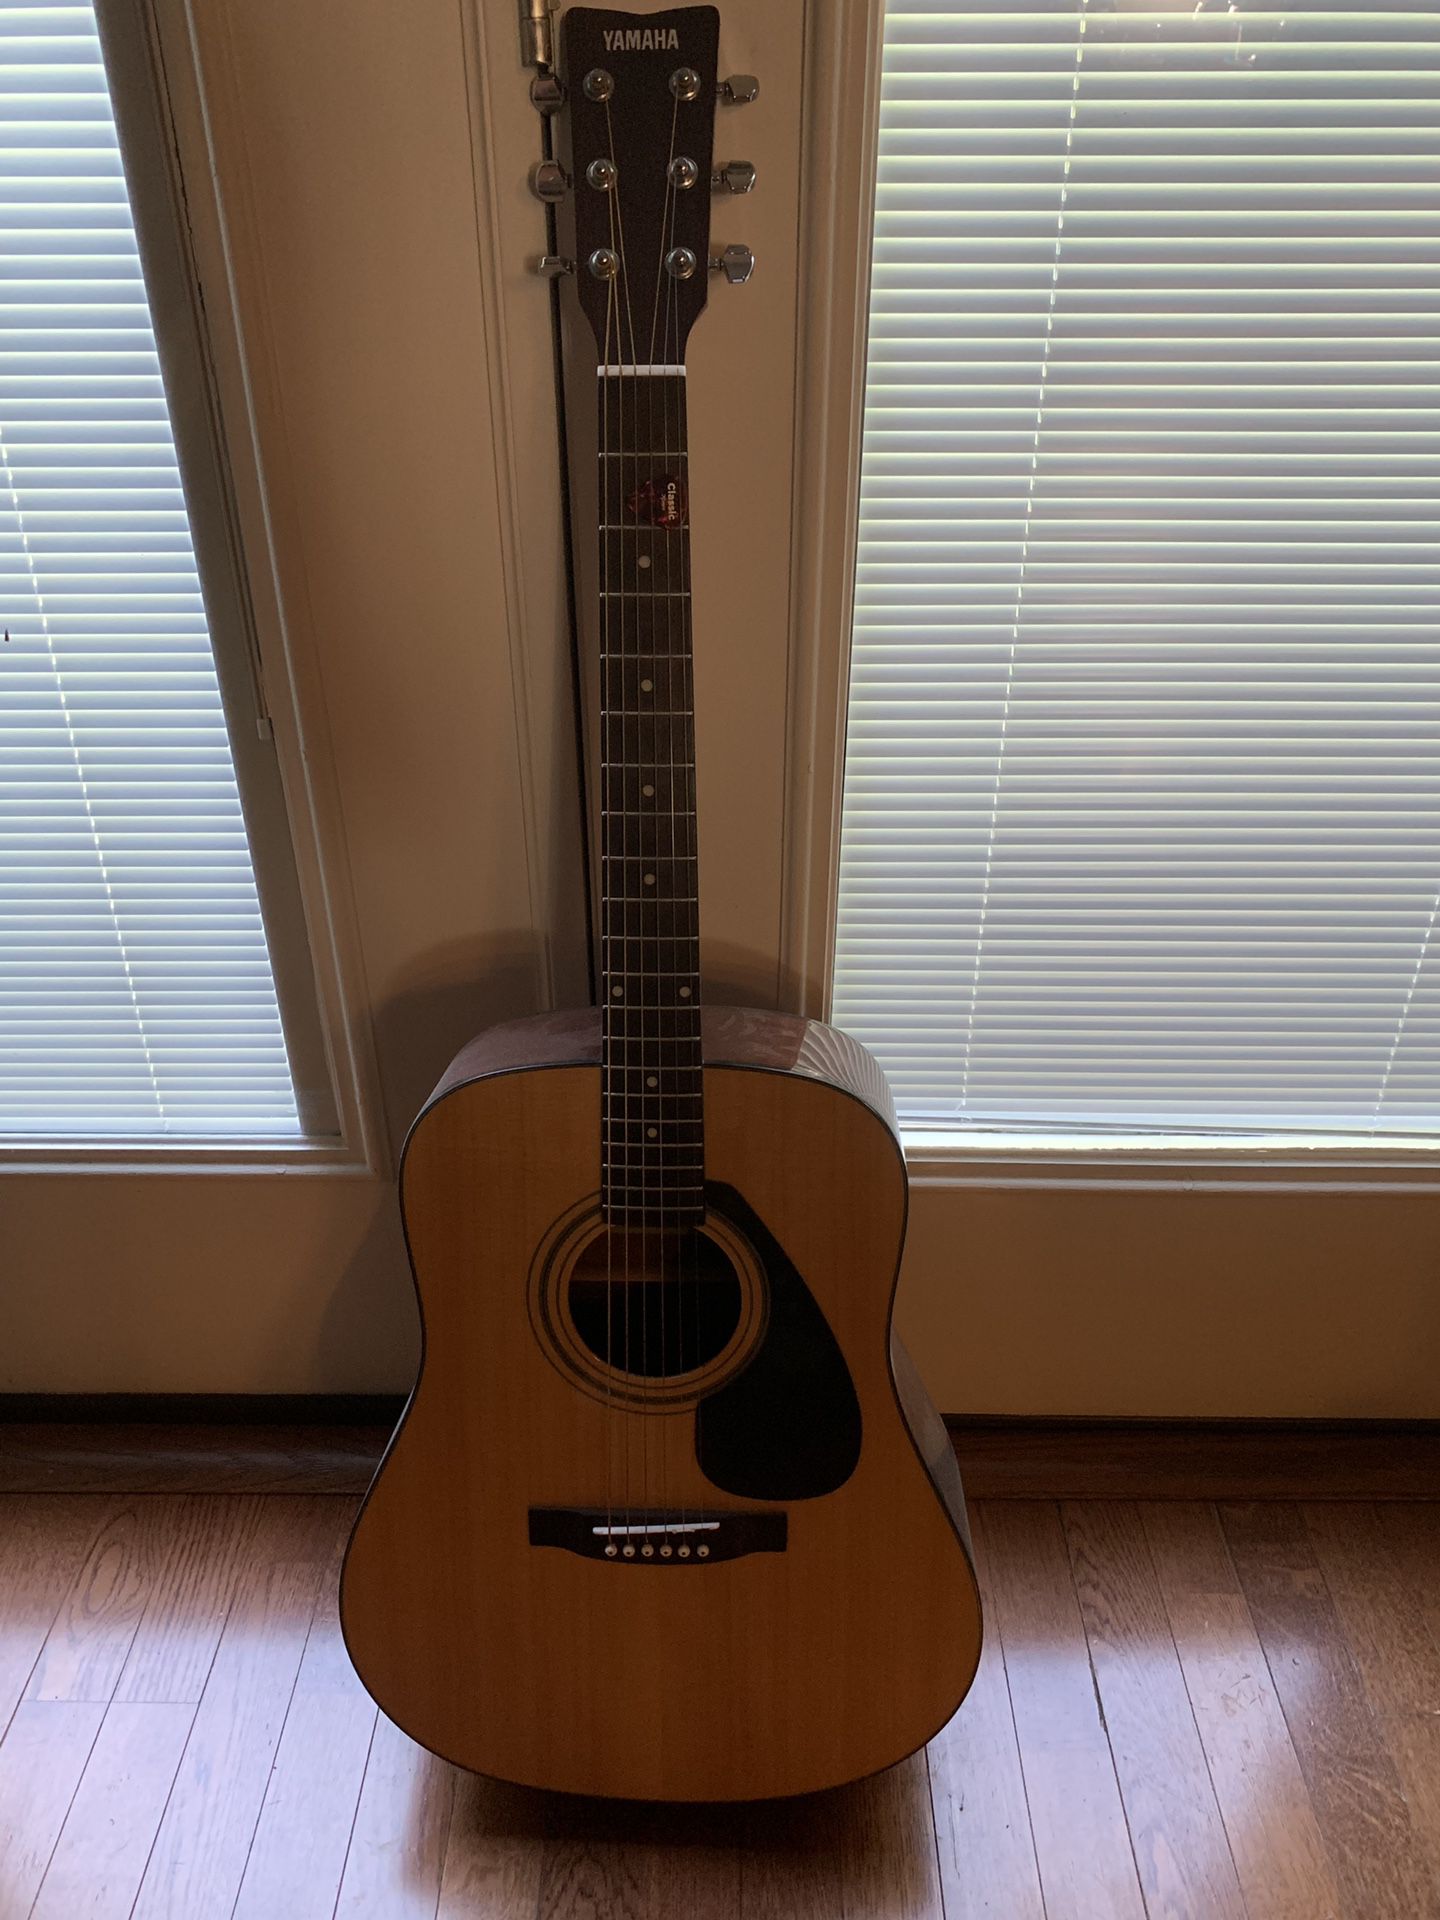 Yamaha beginners guitar